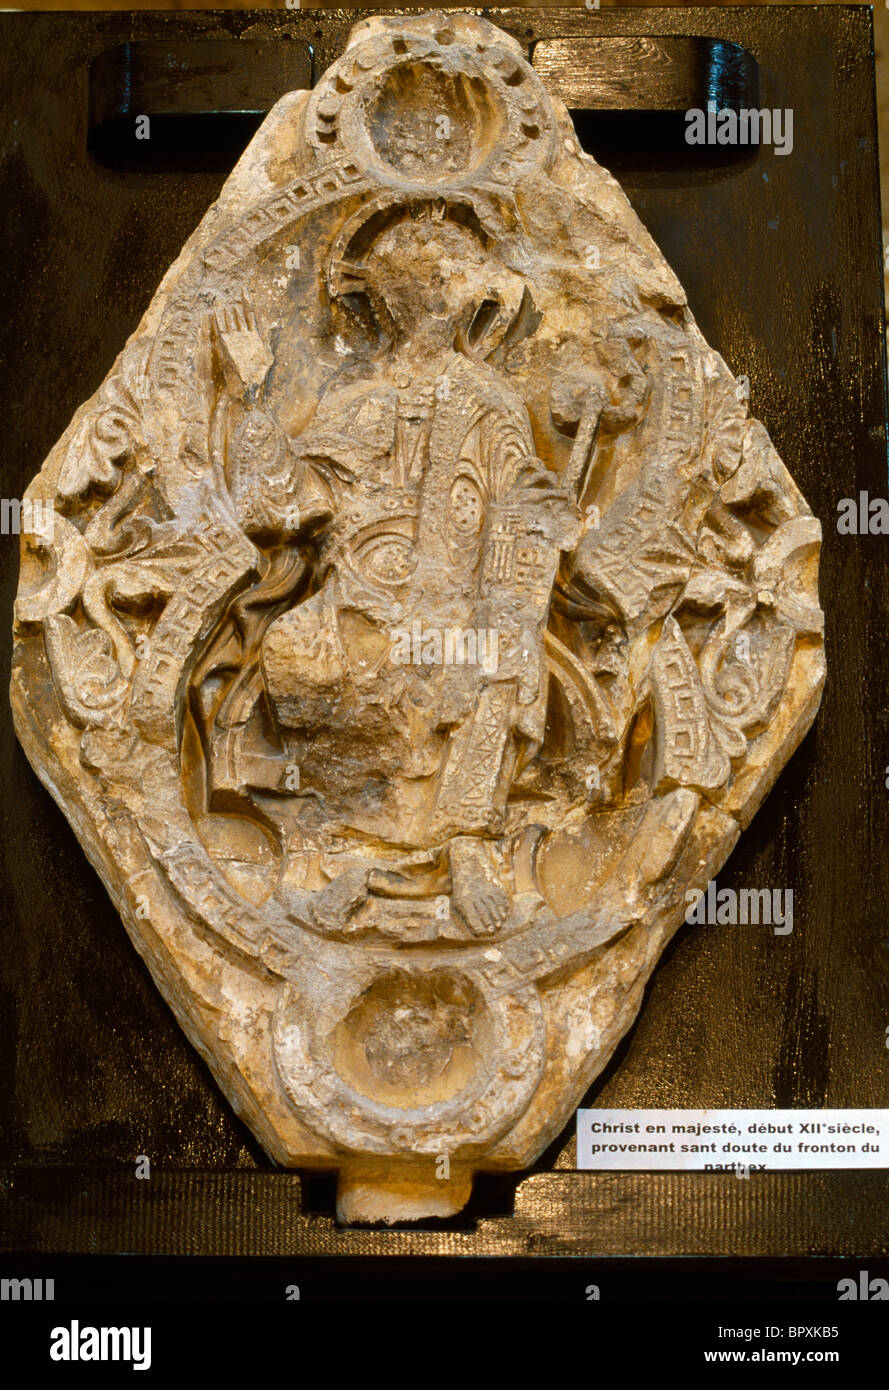 St Guilhem le Desert Francia Languedoc-rosellón alivio del Cristo en majestad del siglo XII (12ª Siglo) Foto de stock